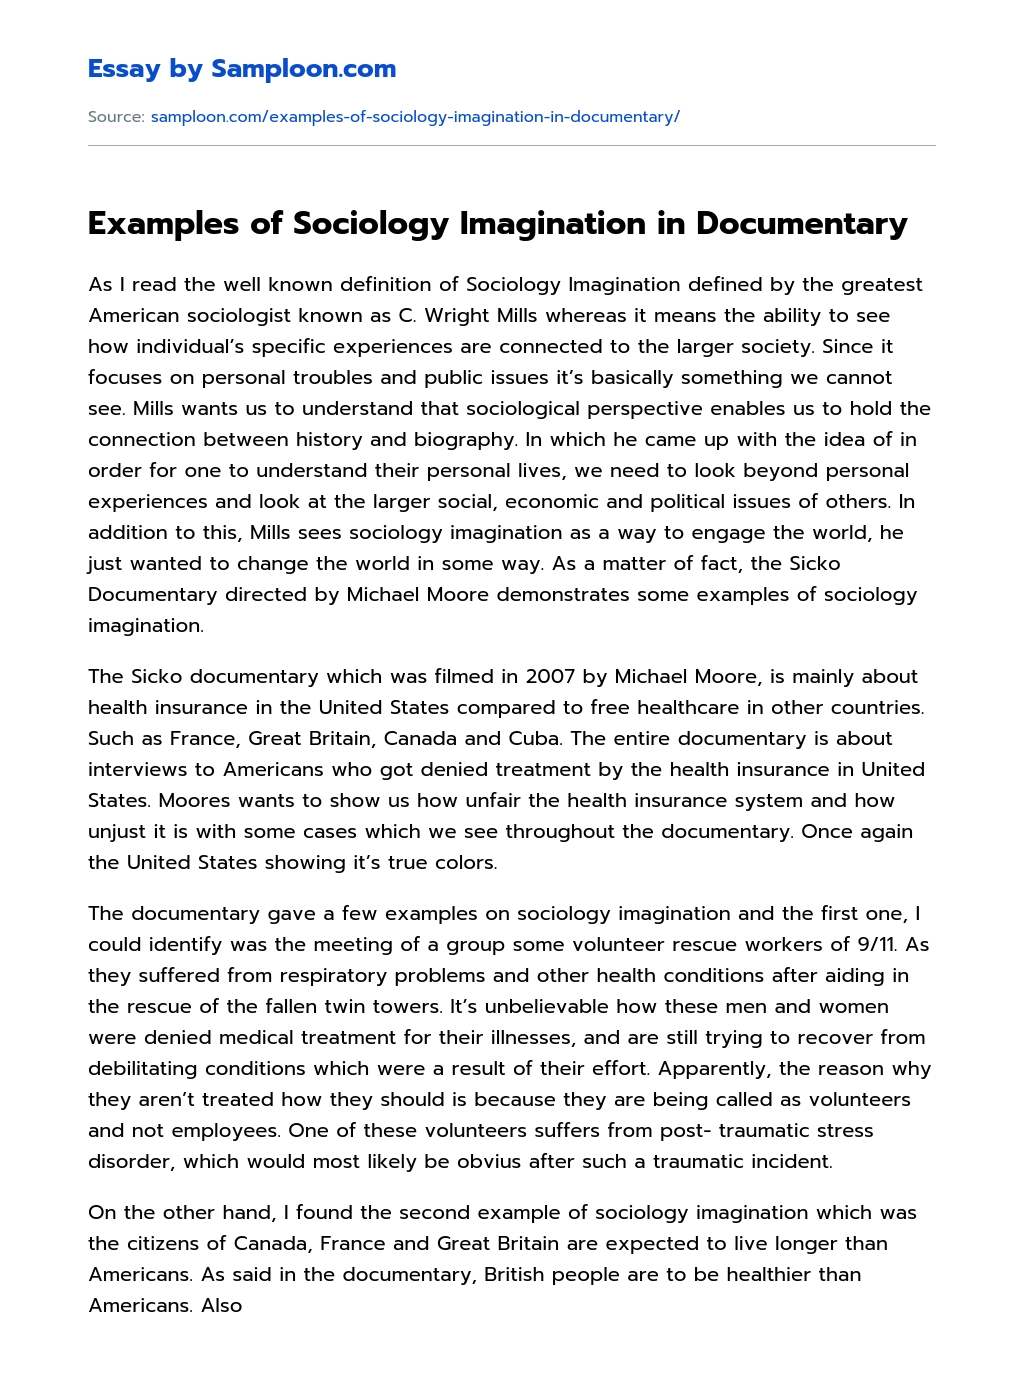 sociological imagination essay topics